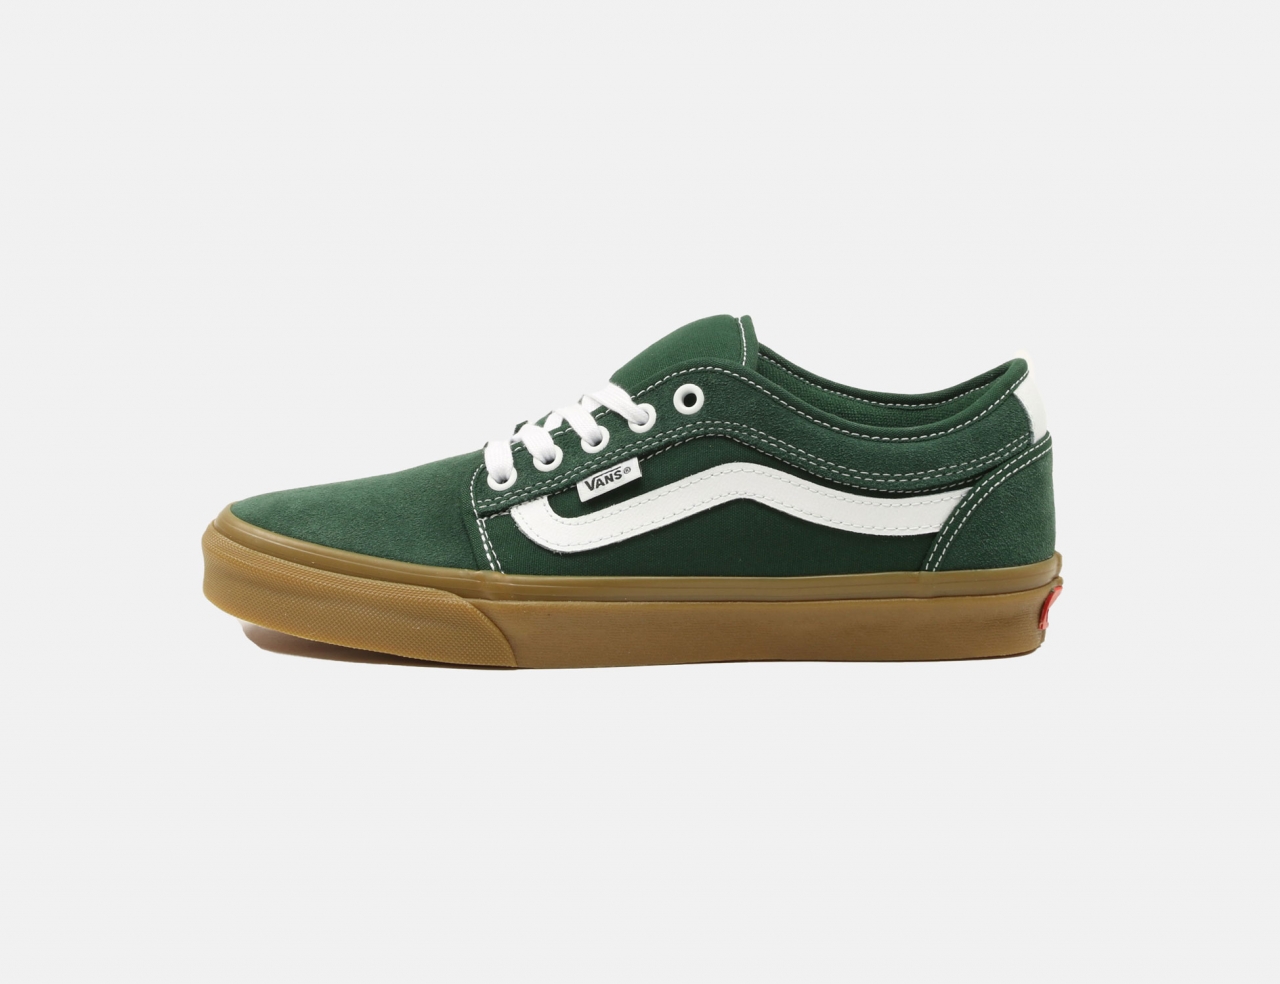 VANS MN Chukka Low Sidestrip Sneaker - Dark Green/Gum